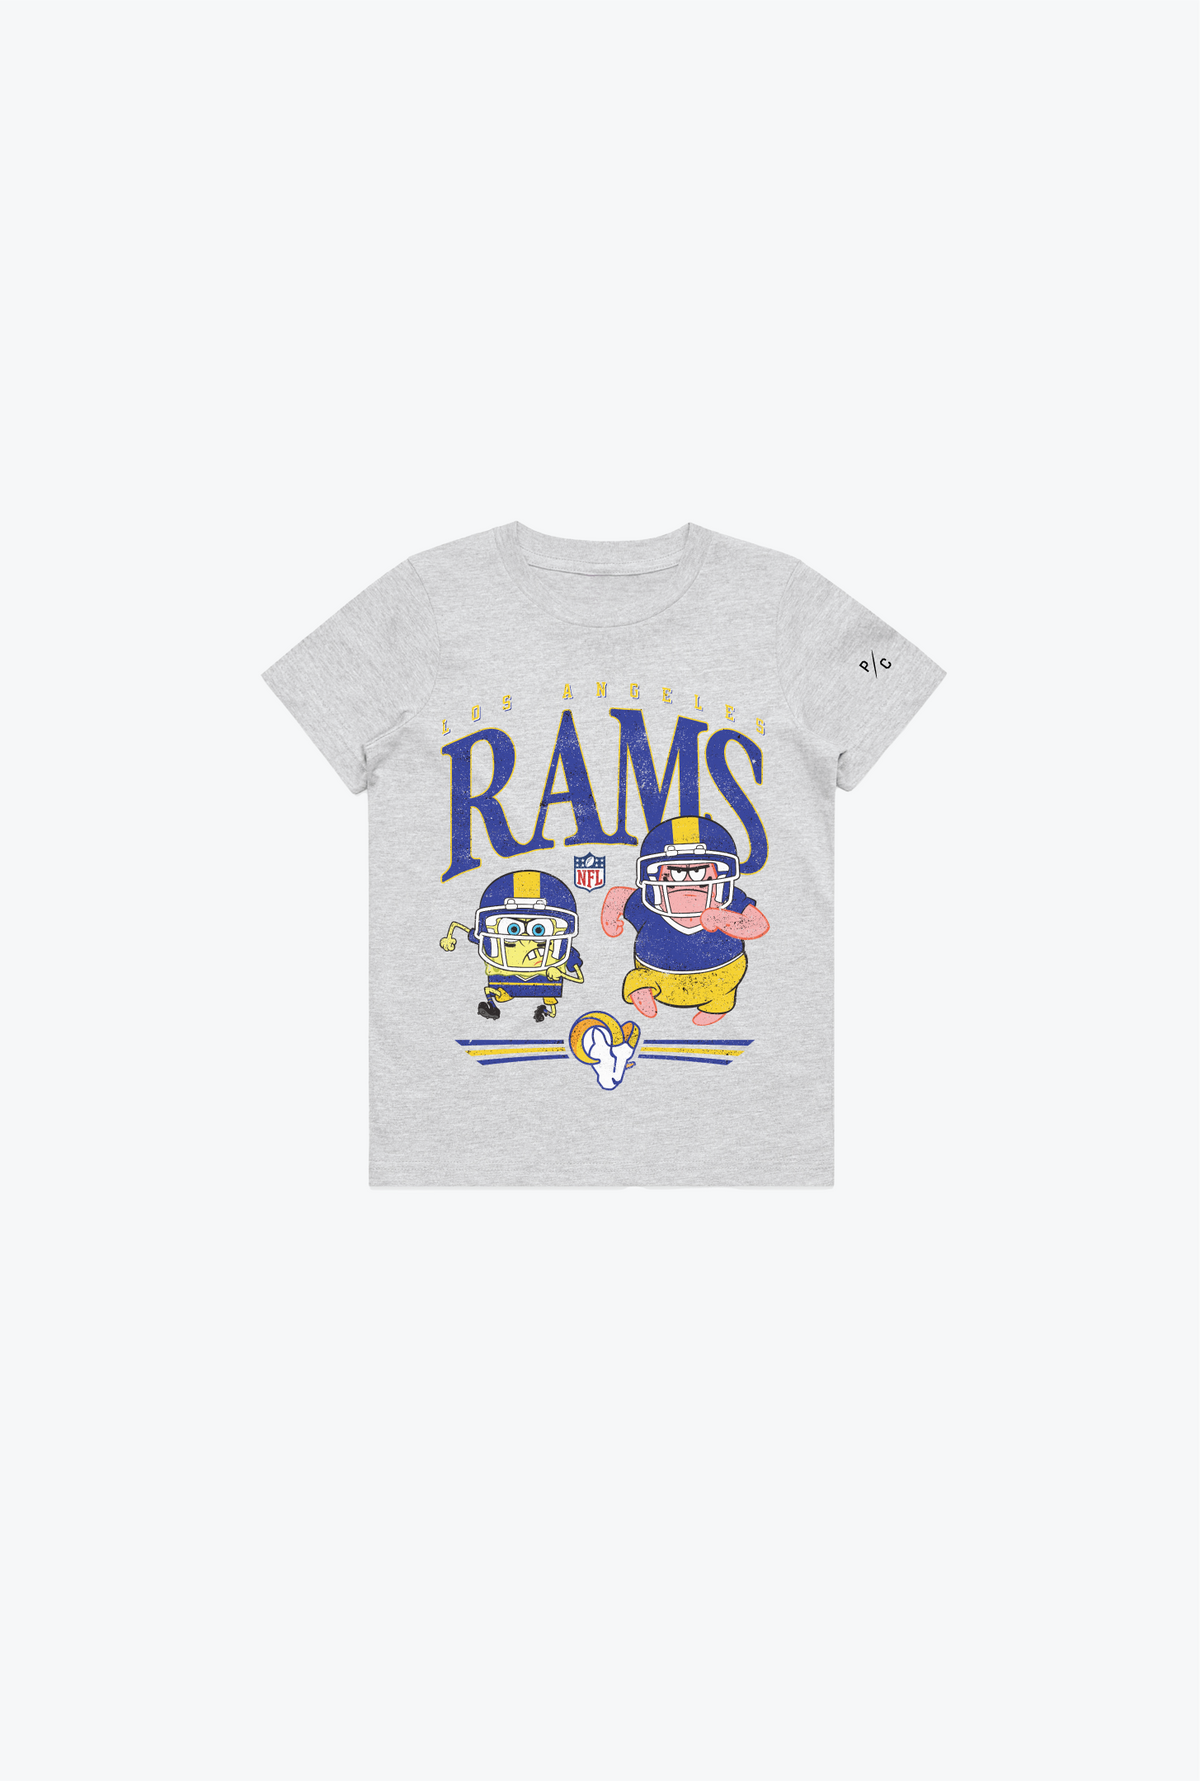 Spongebob & Patrick Rush Kids T-Shirt - Los Angeles Rams